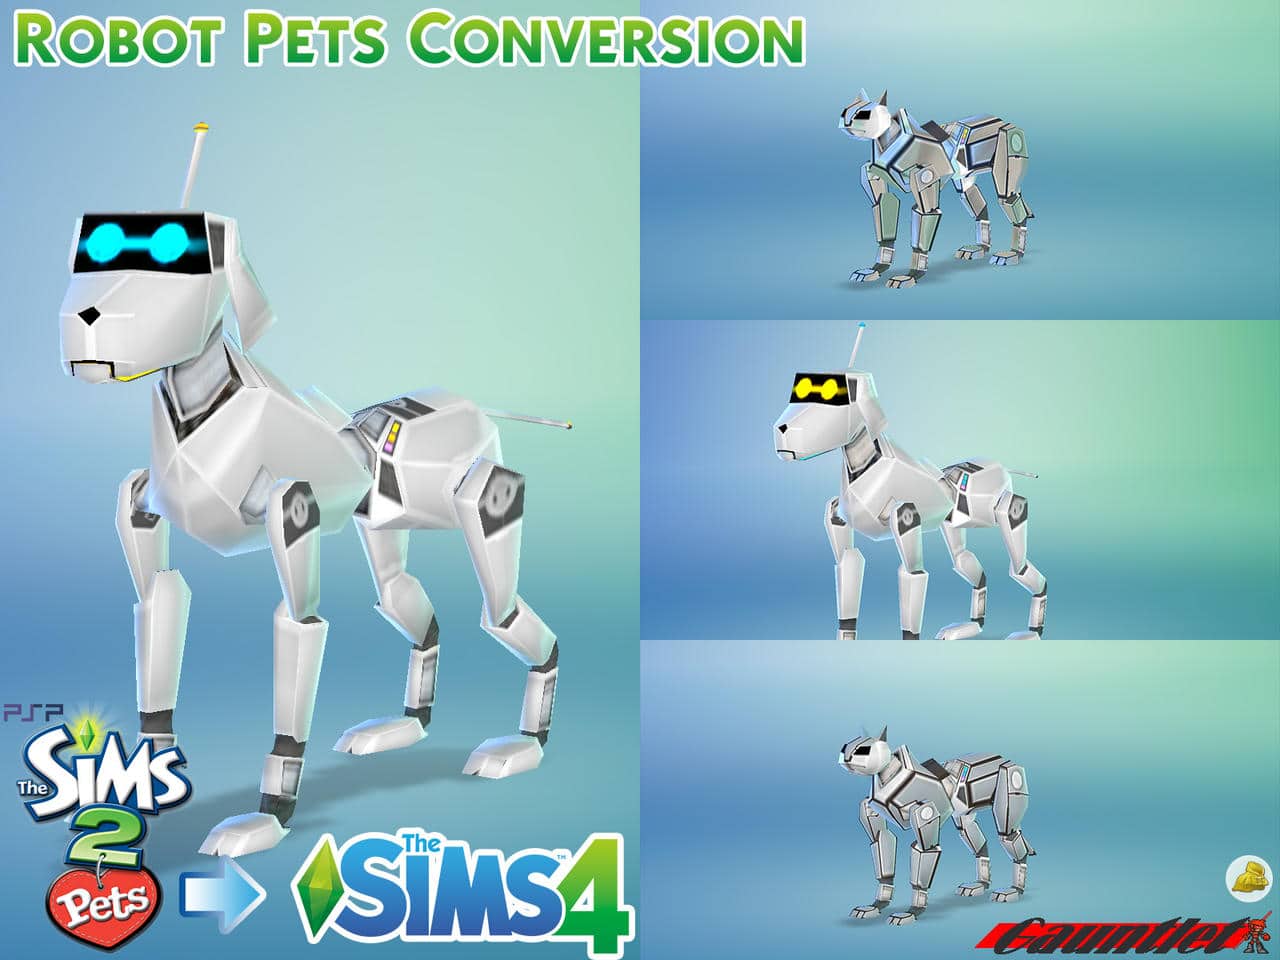 Sims 2 Pets to Sims 4 Robot Pets Conversion